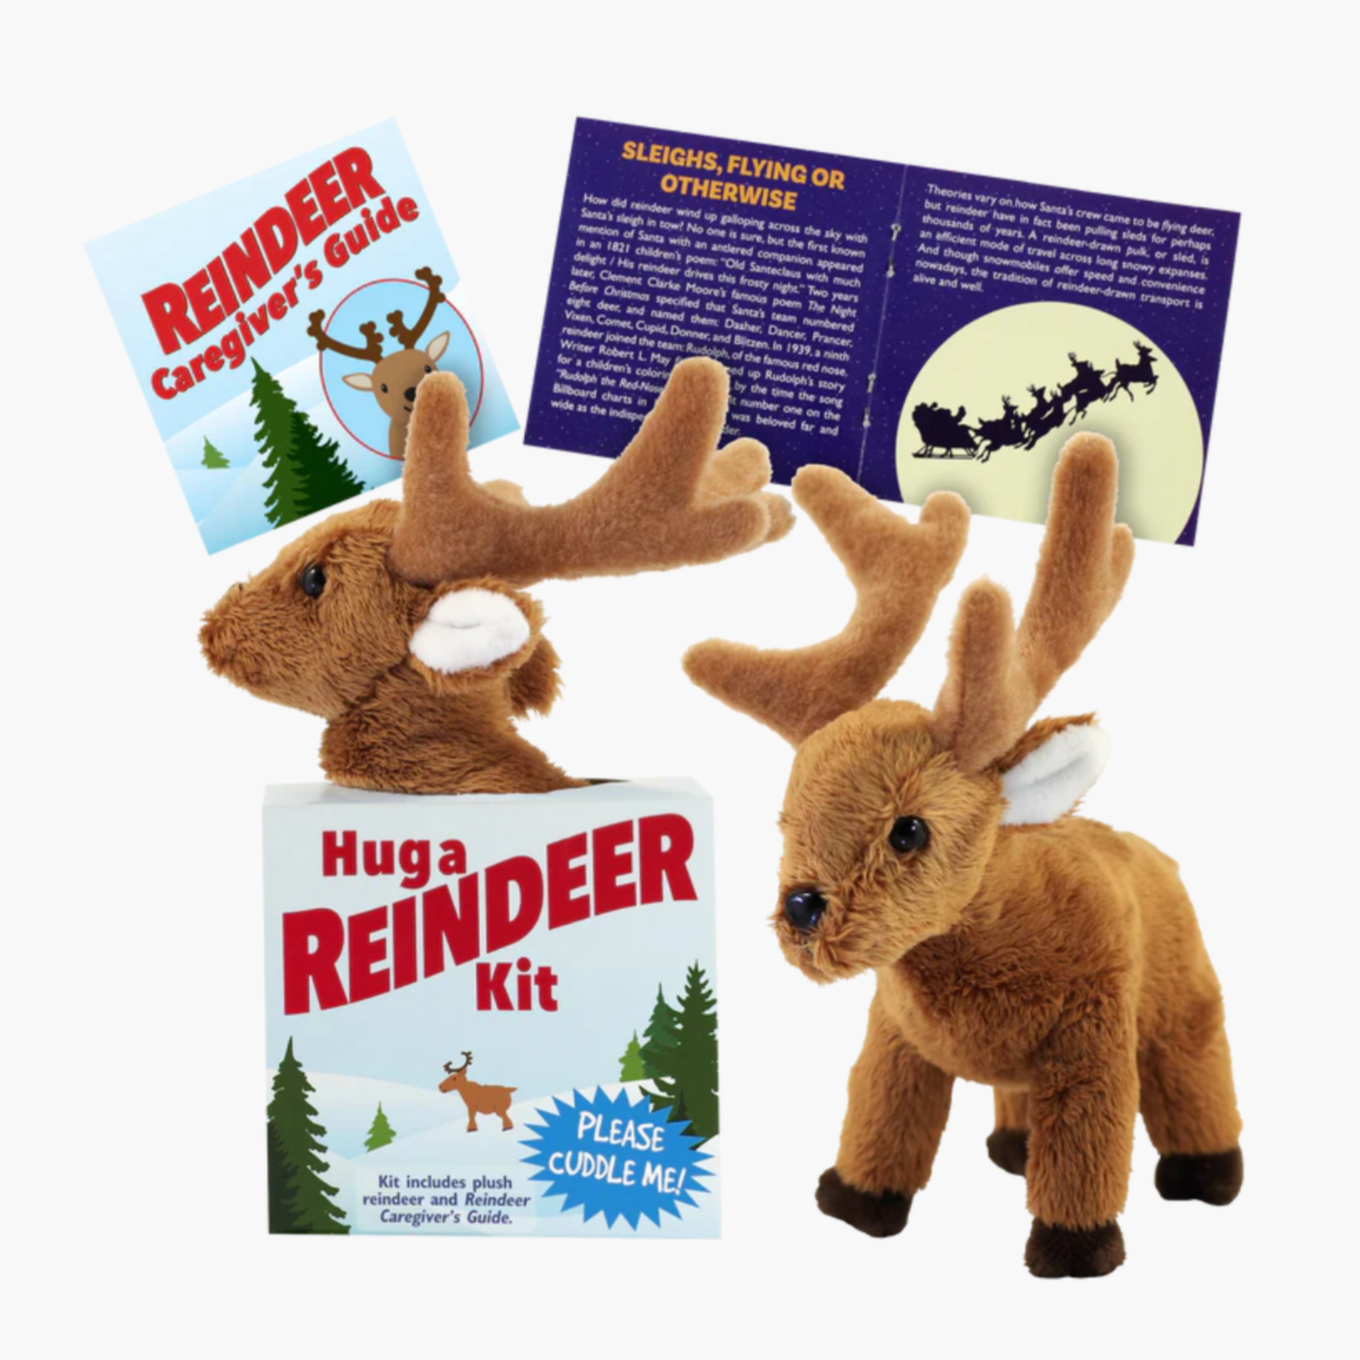 Hug a Reindeer Kit